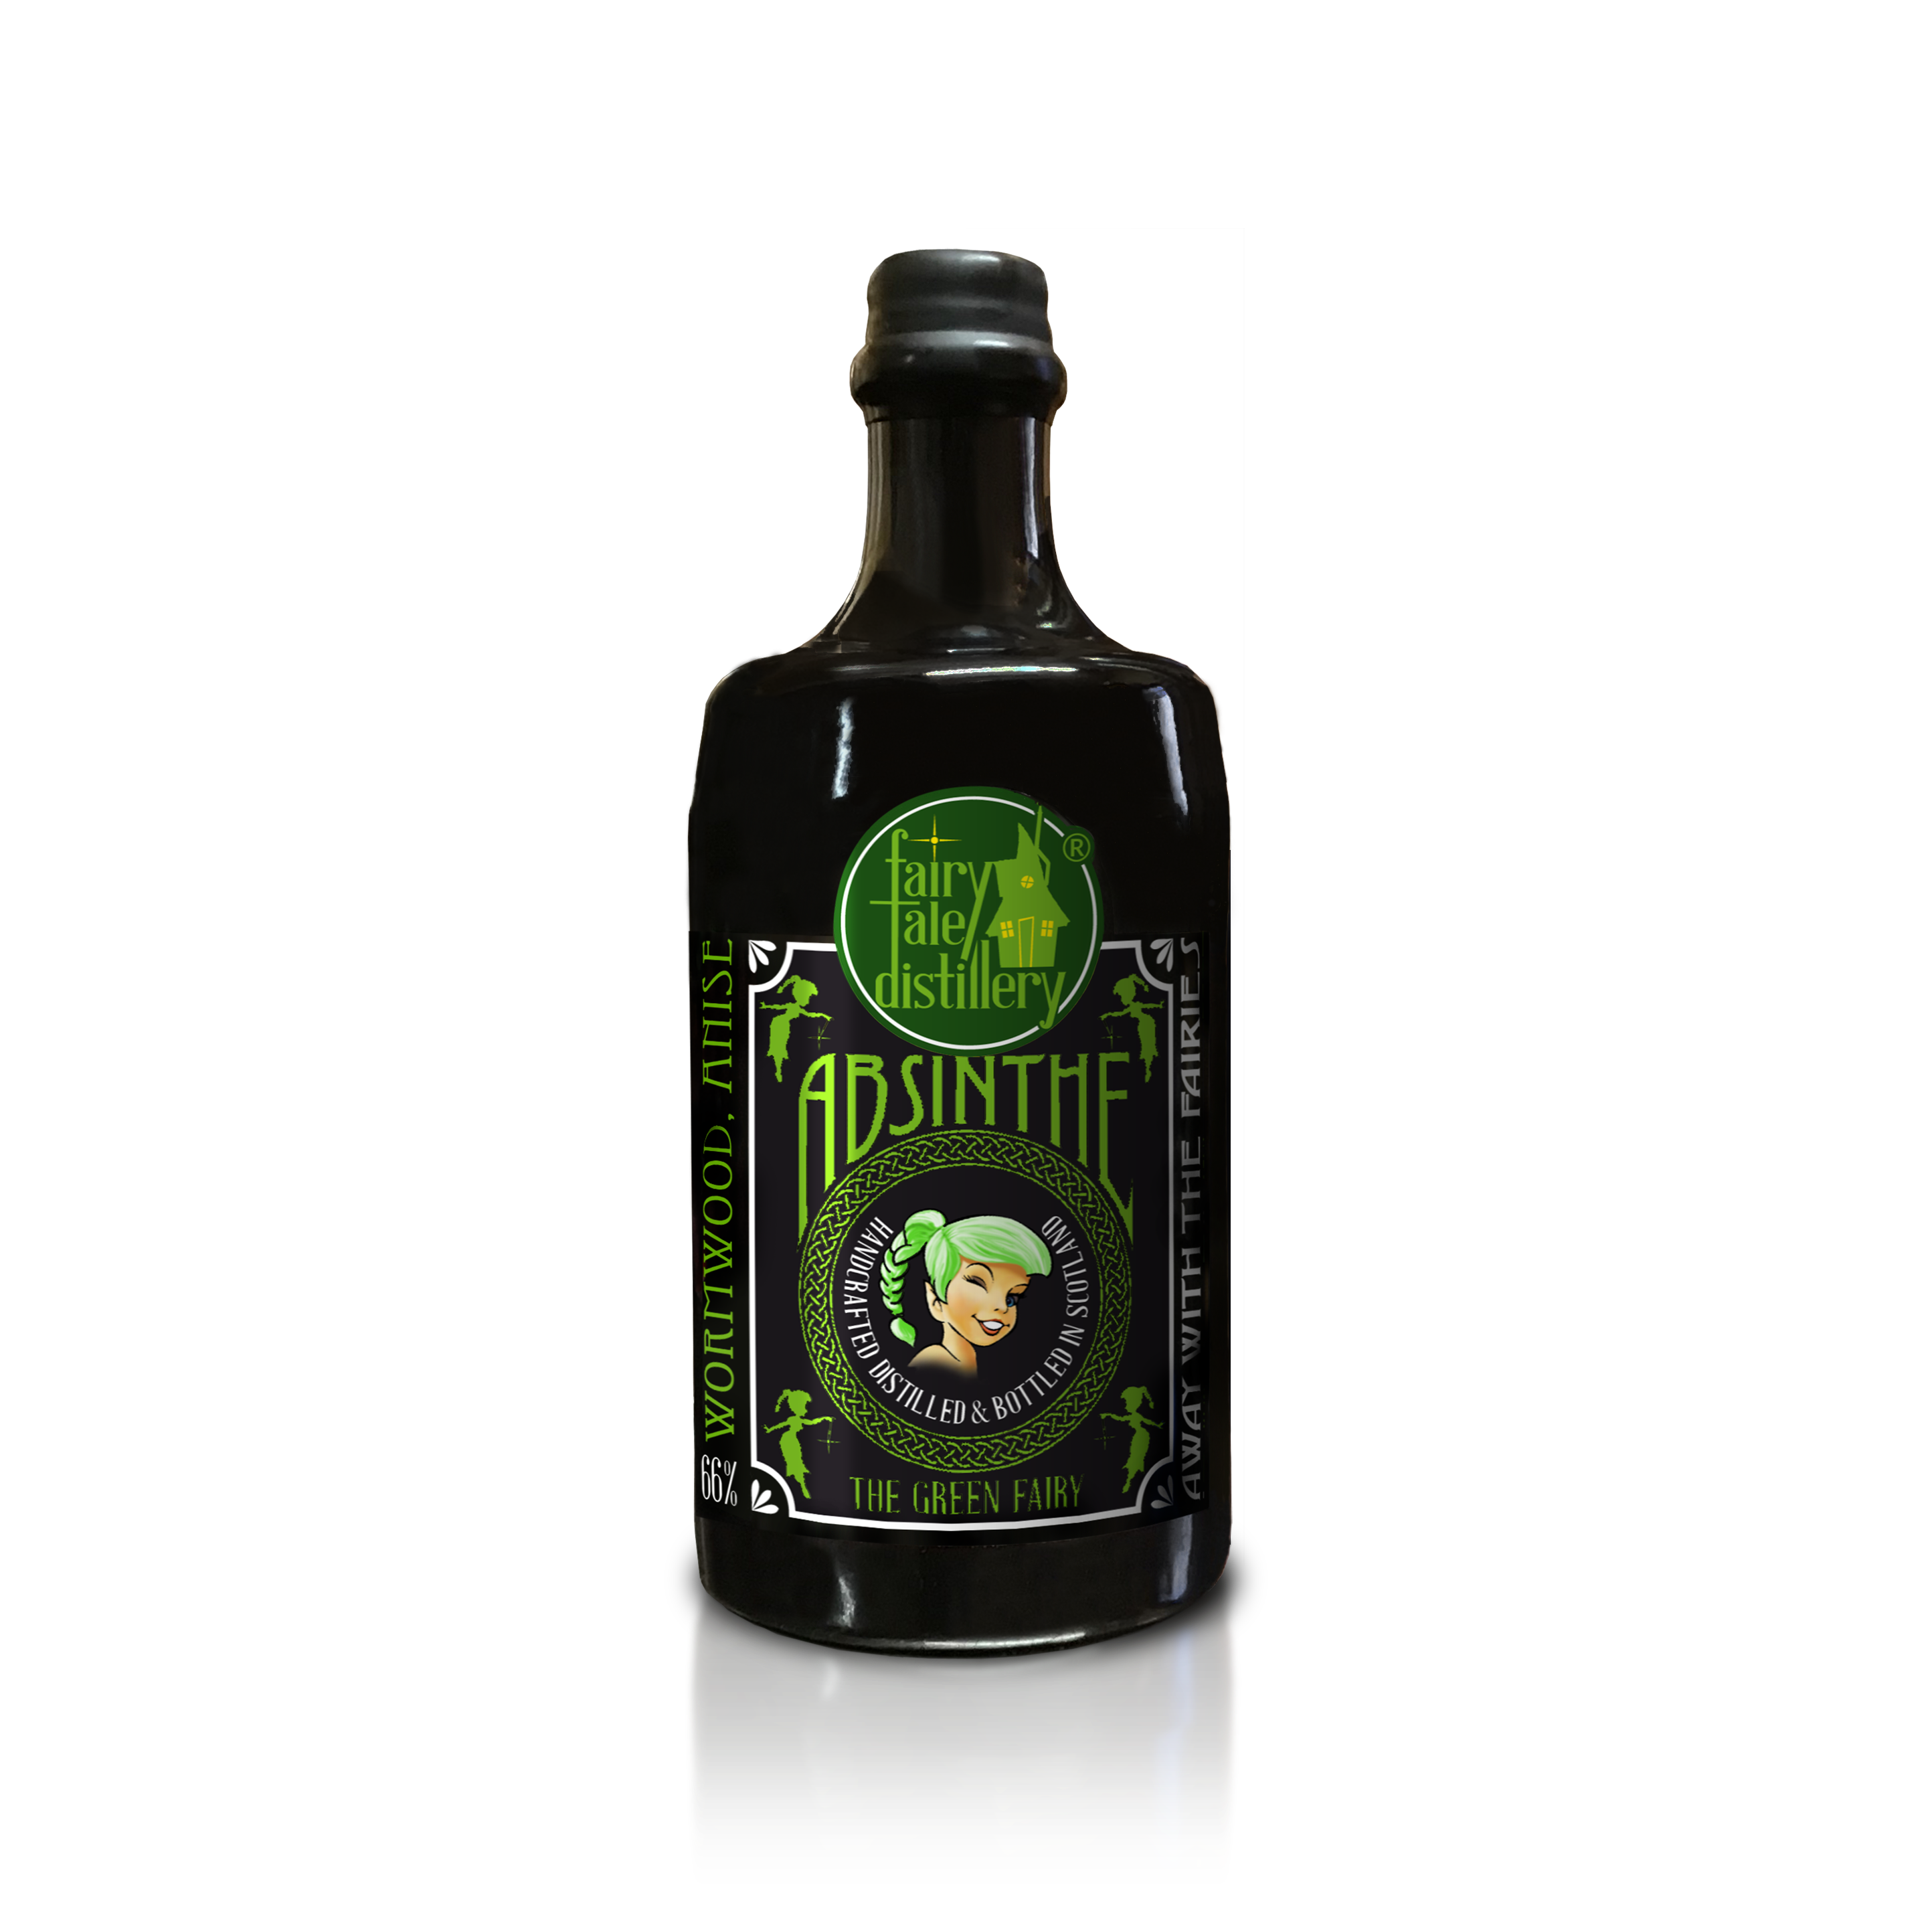 The Green Fairy Highland Absinthe bottle 0,7l from Fairytale Distillery